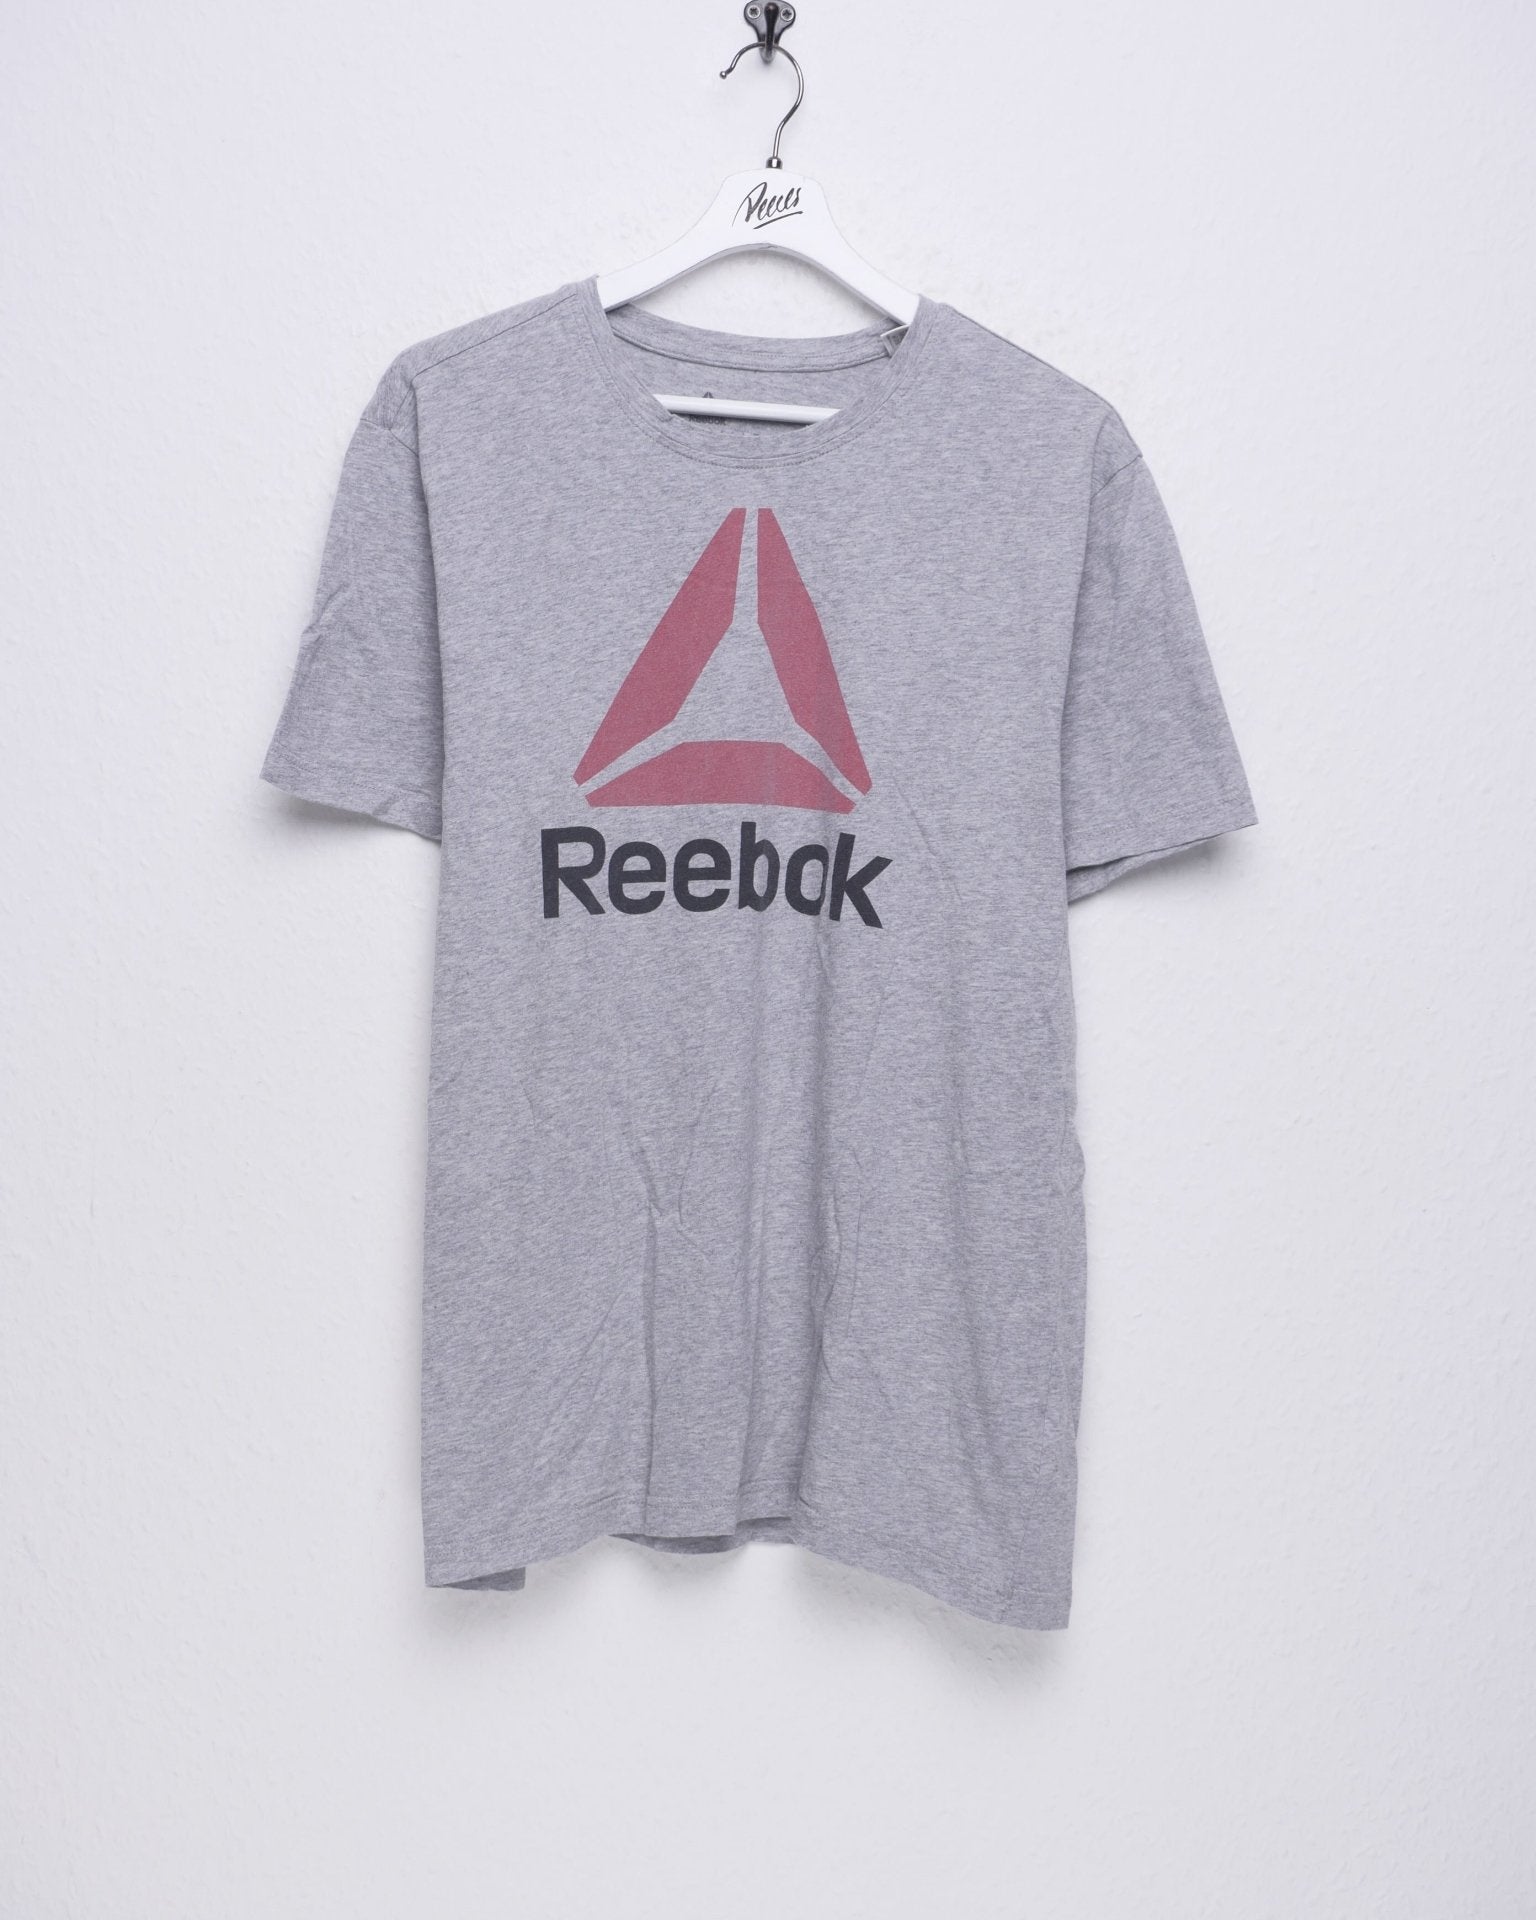 Reebok printed Graphic Vintage Shirt - Peeces